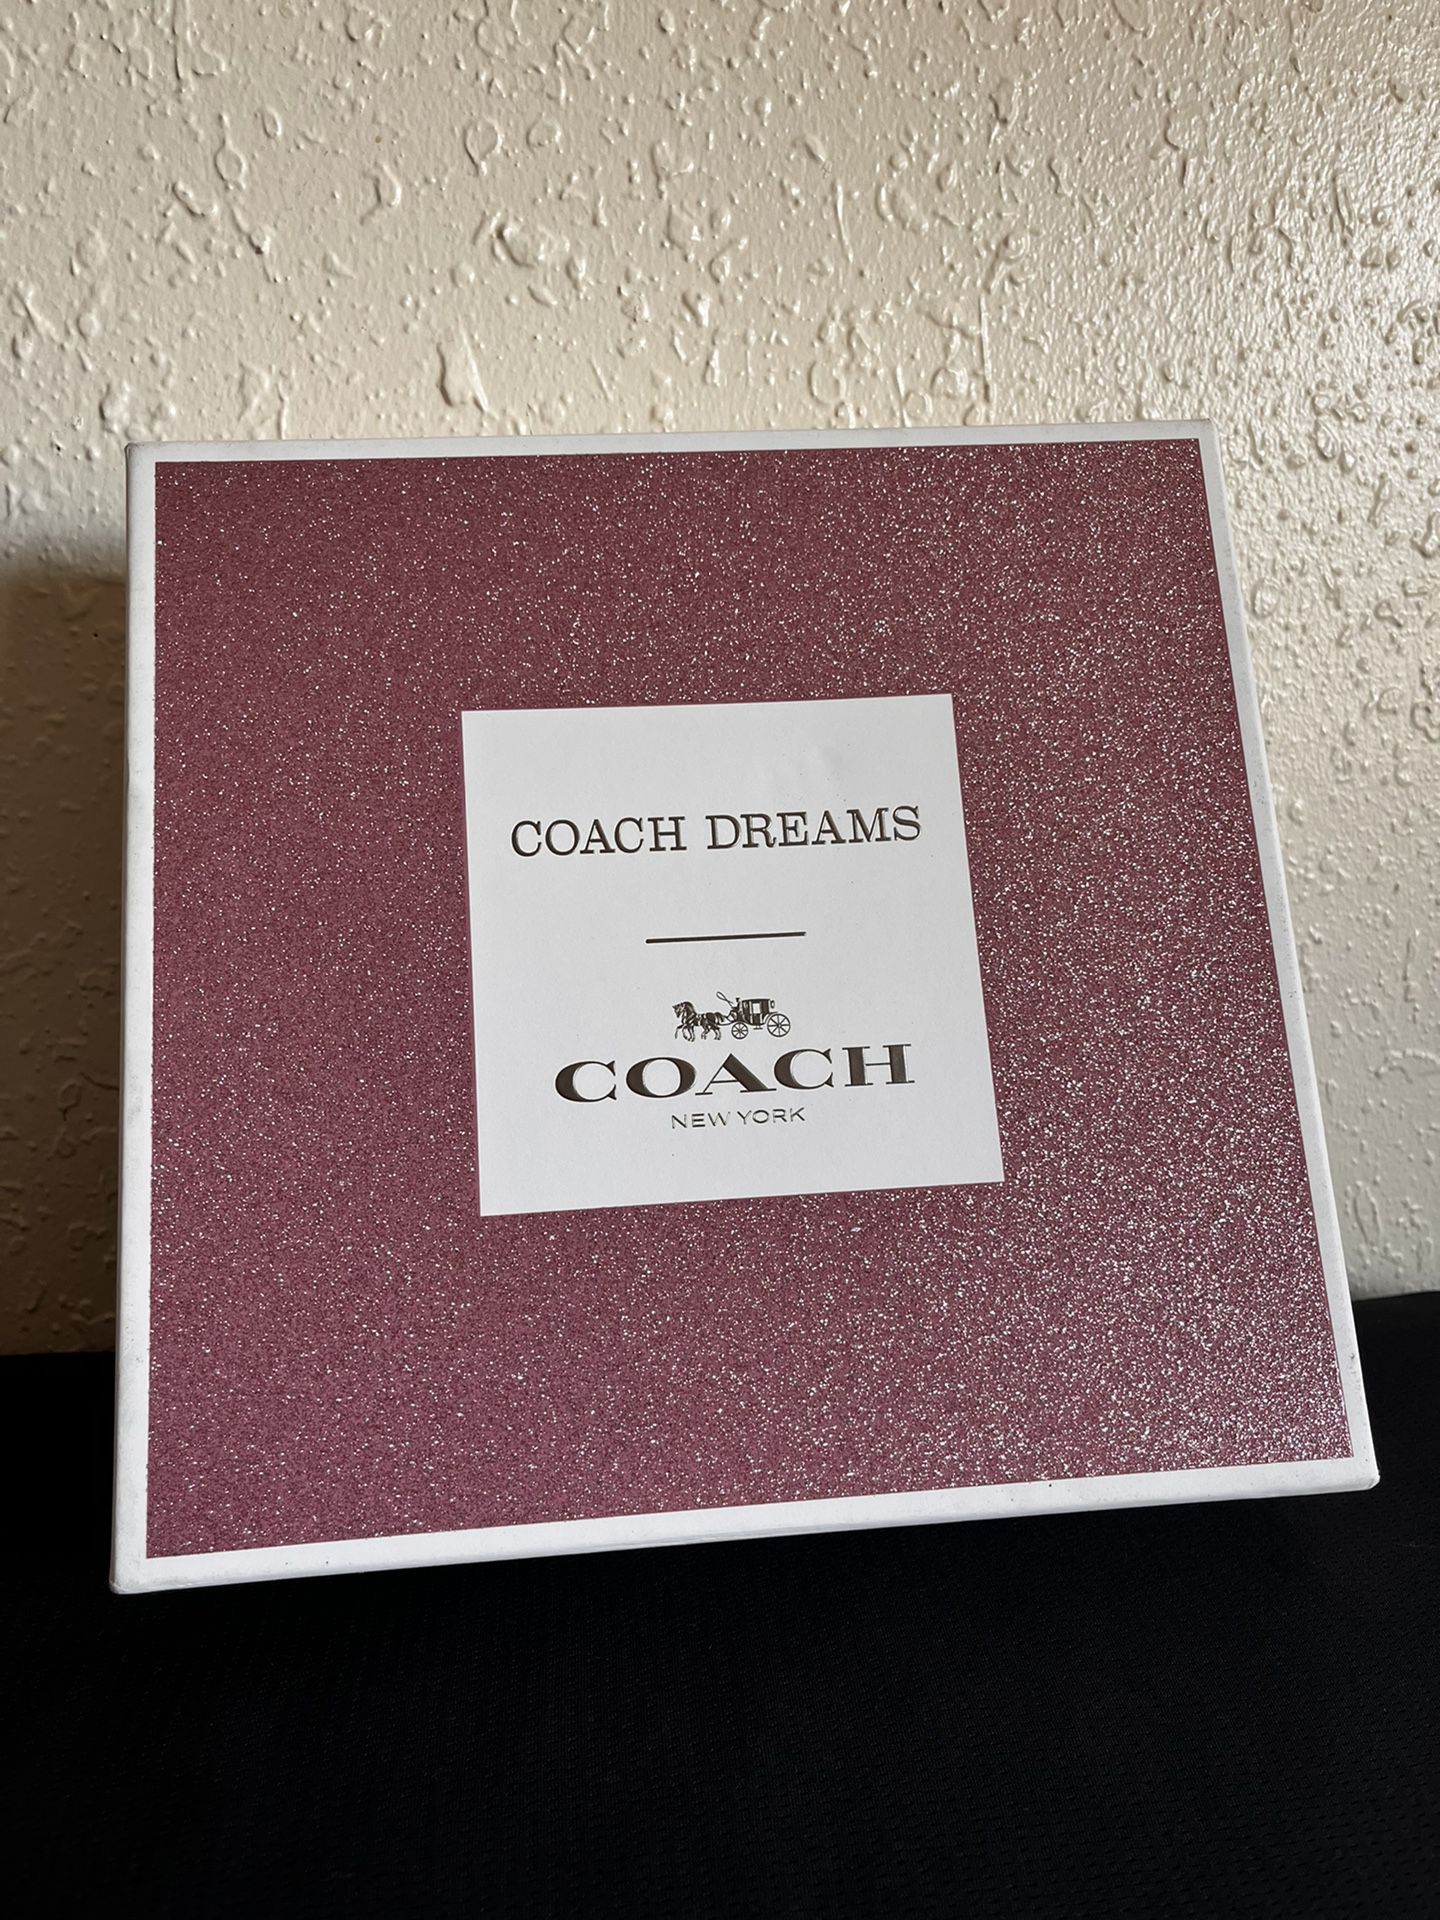 Coach Dreams Perfume Set